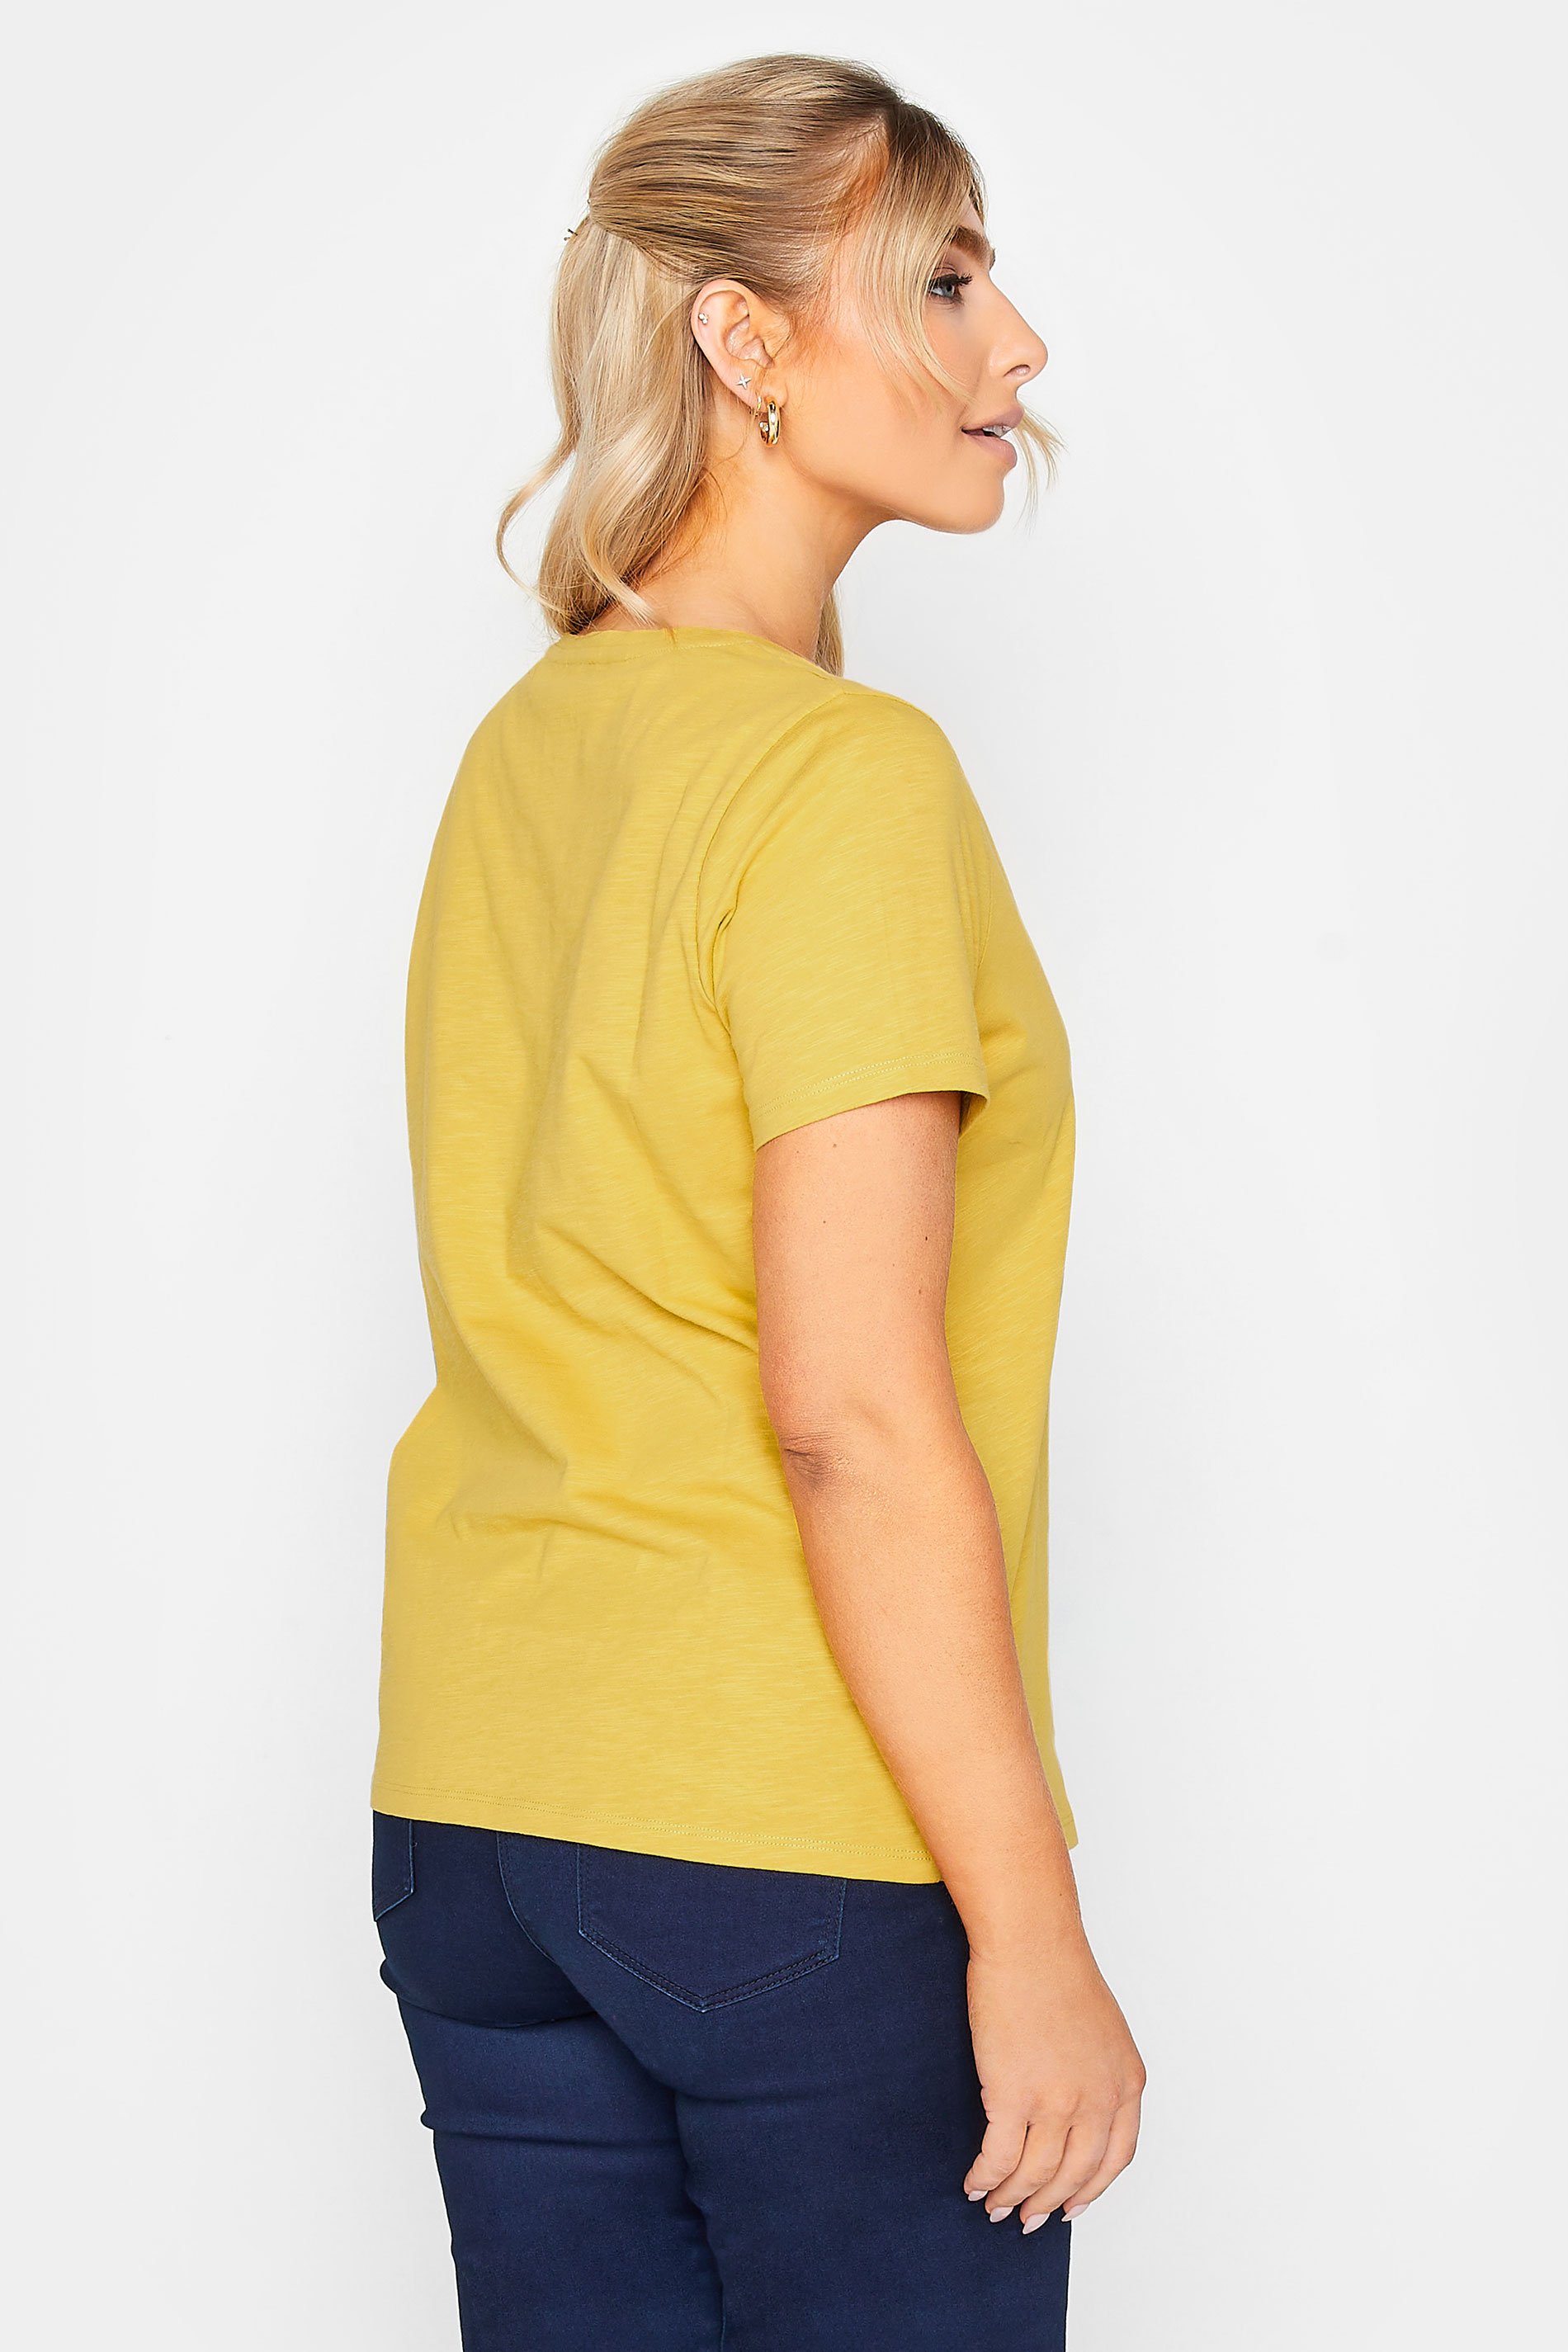 M&Co Yellow V-Neck Cotton T-Shirt | M&Co 3